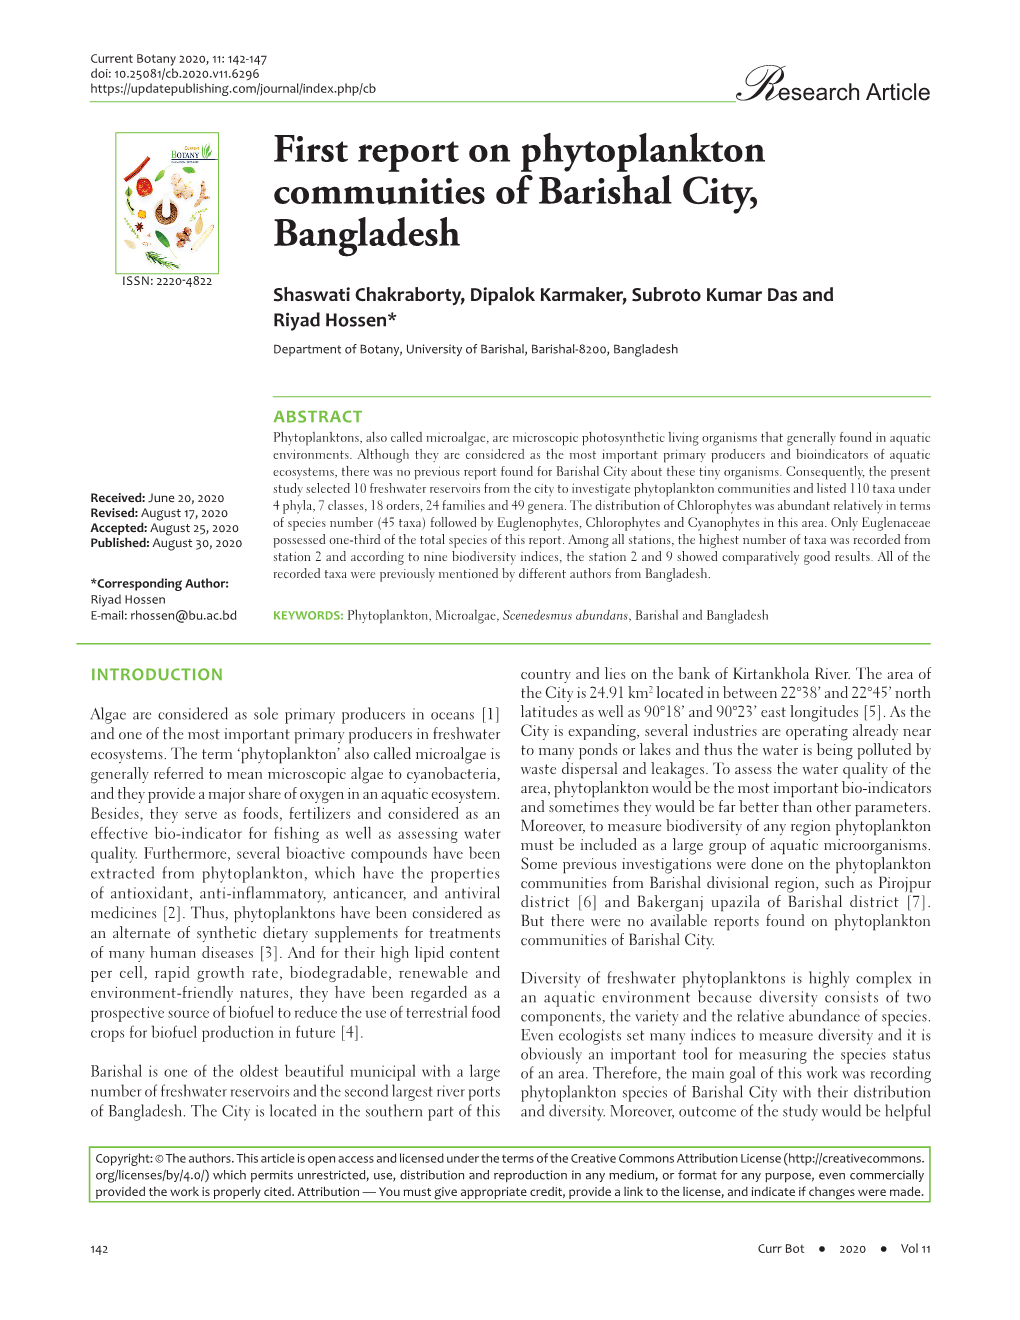 First Report on Phytoplankton Communities of Barishal City, Bangladesh